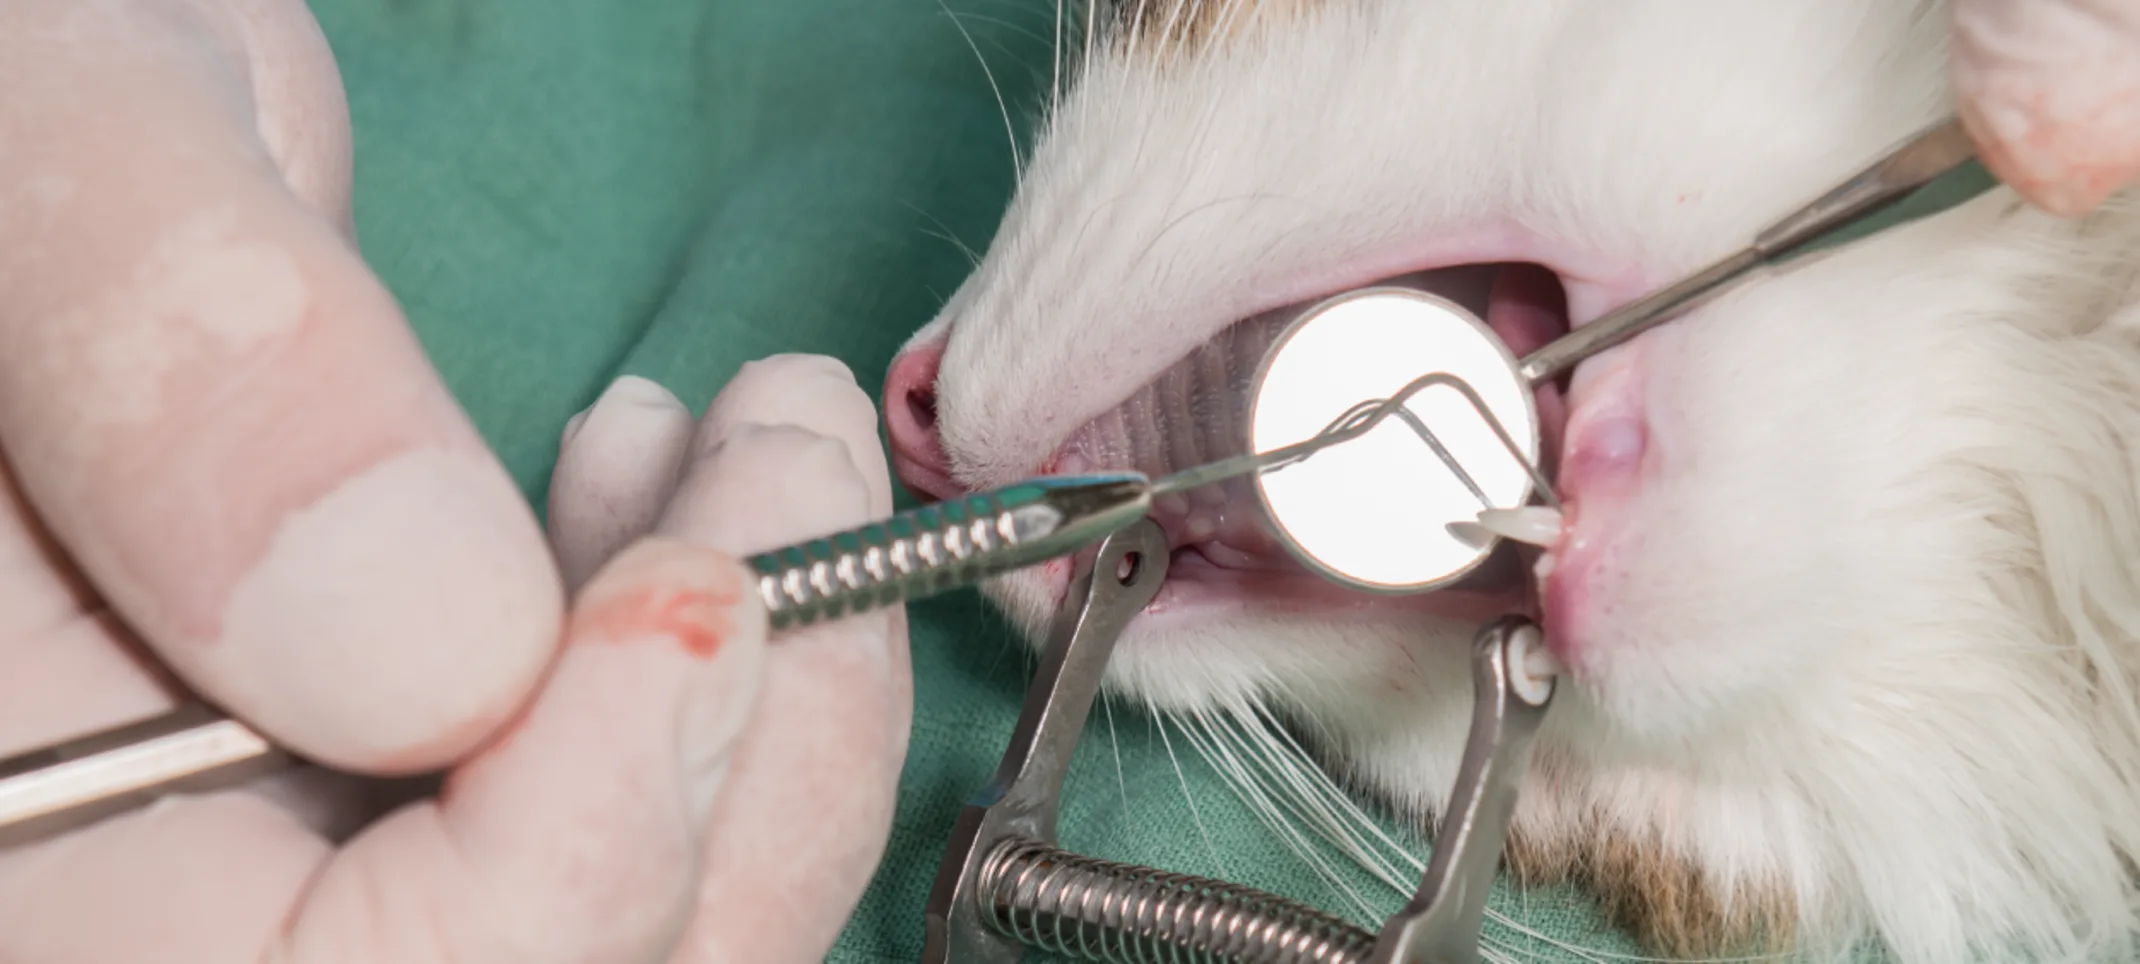 Cat getting dental surgery